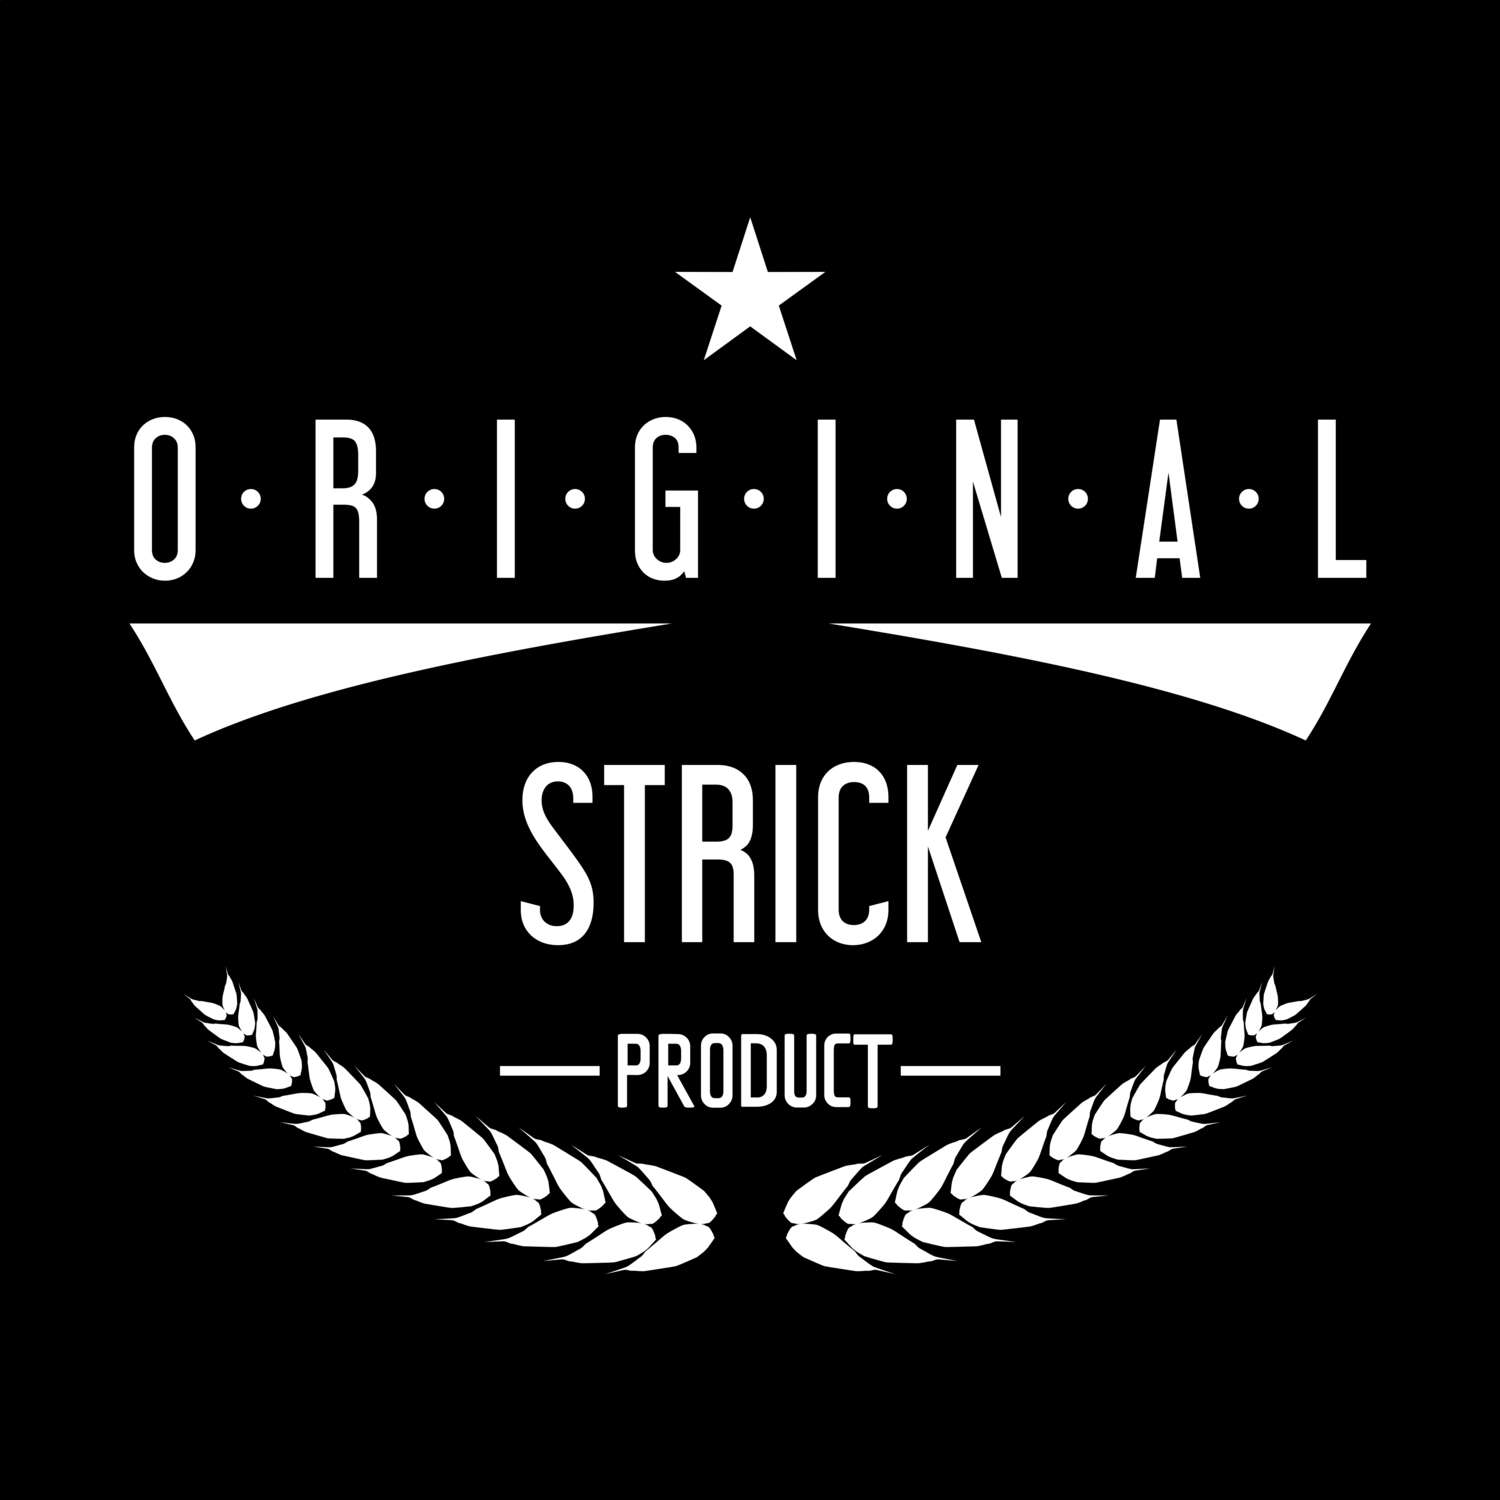 Strick T-Shirt »Original Product«